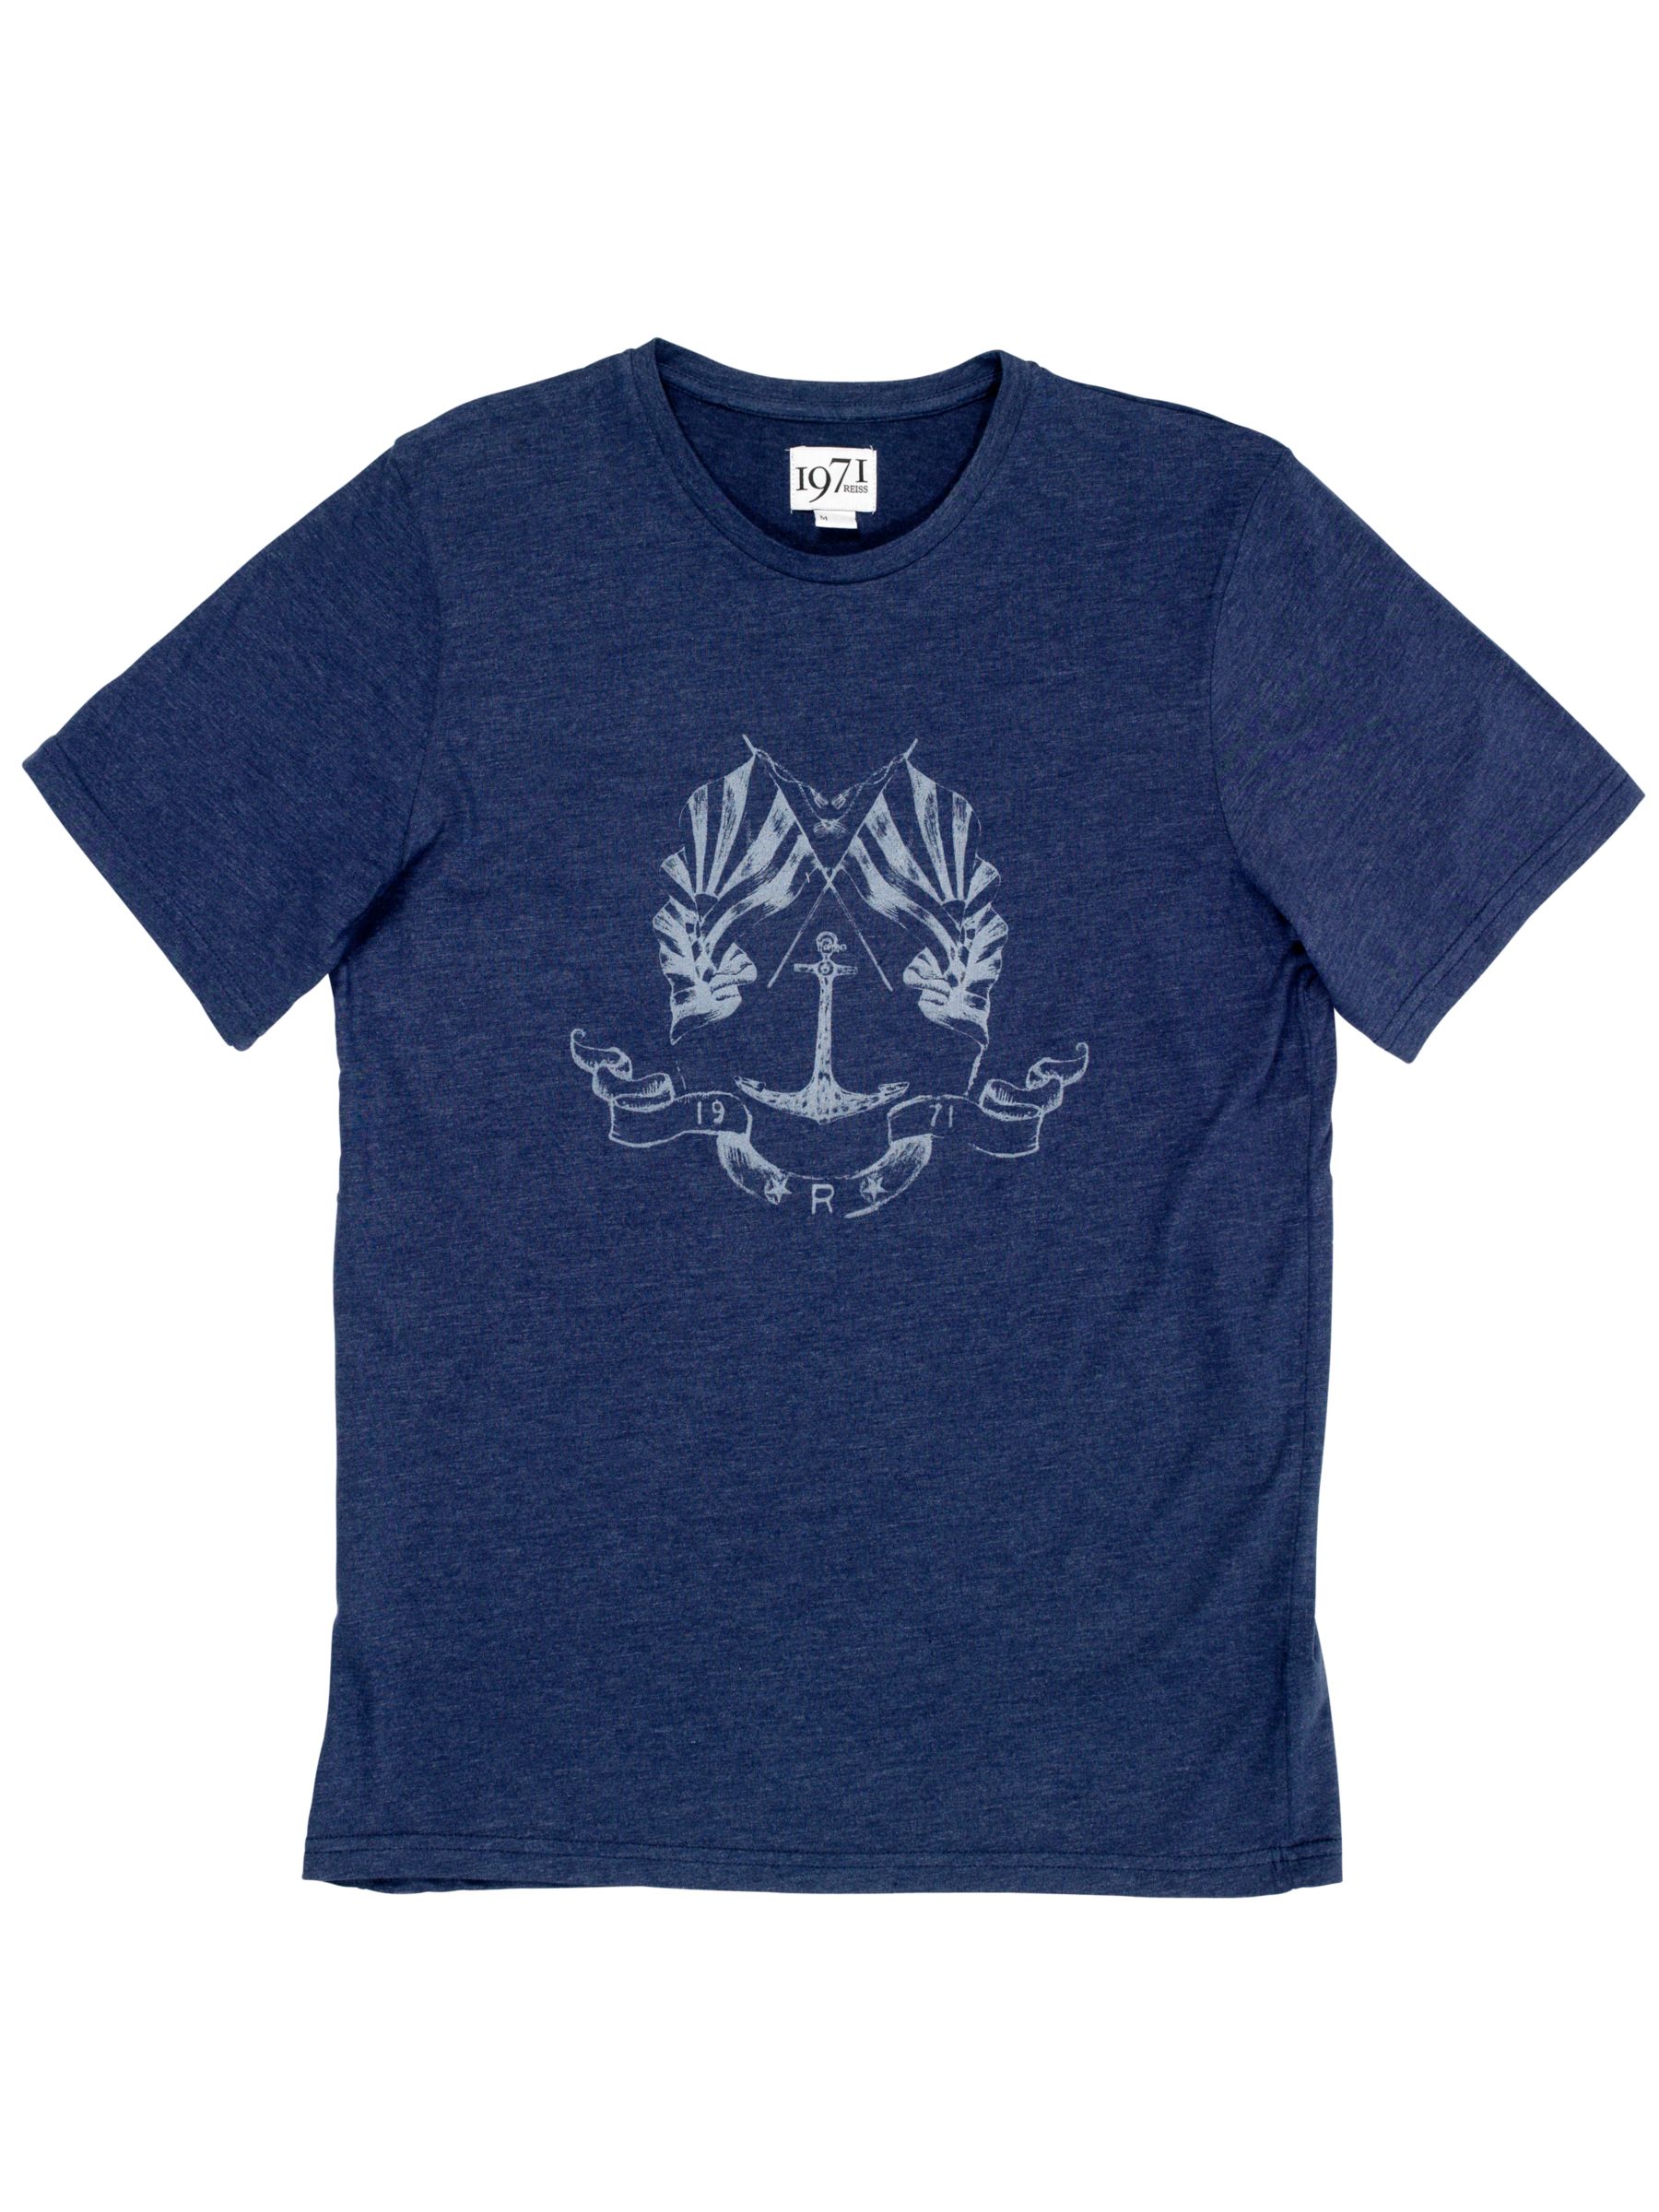 Insignia Print T-Shirt, Blue